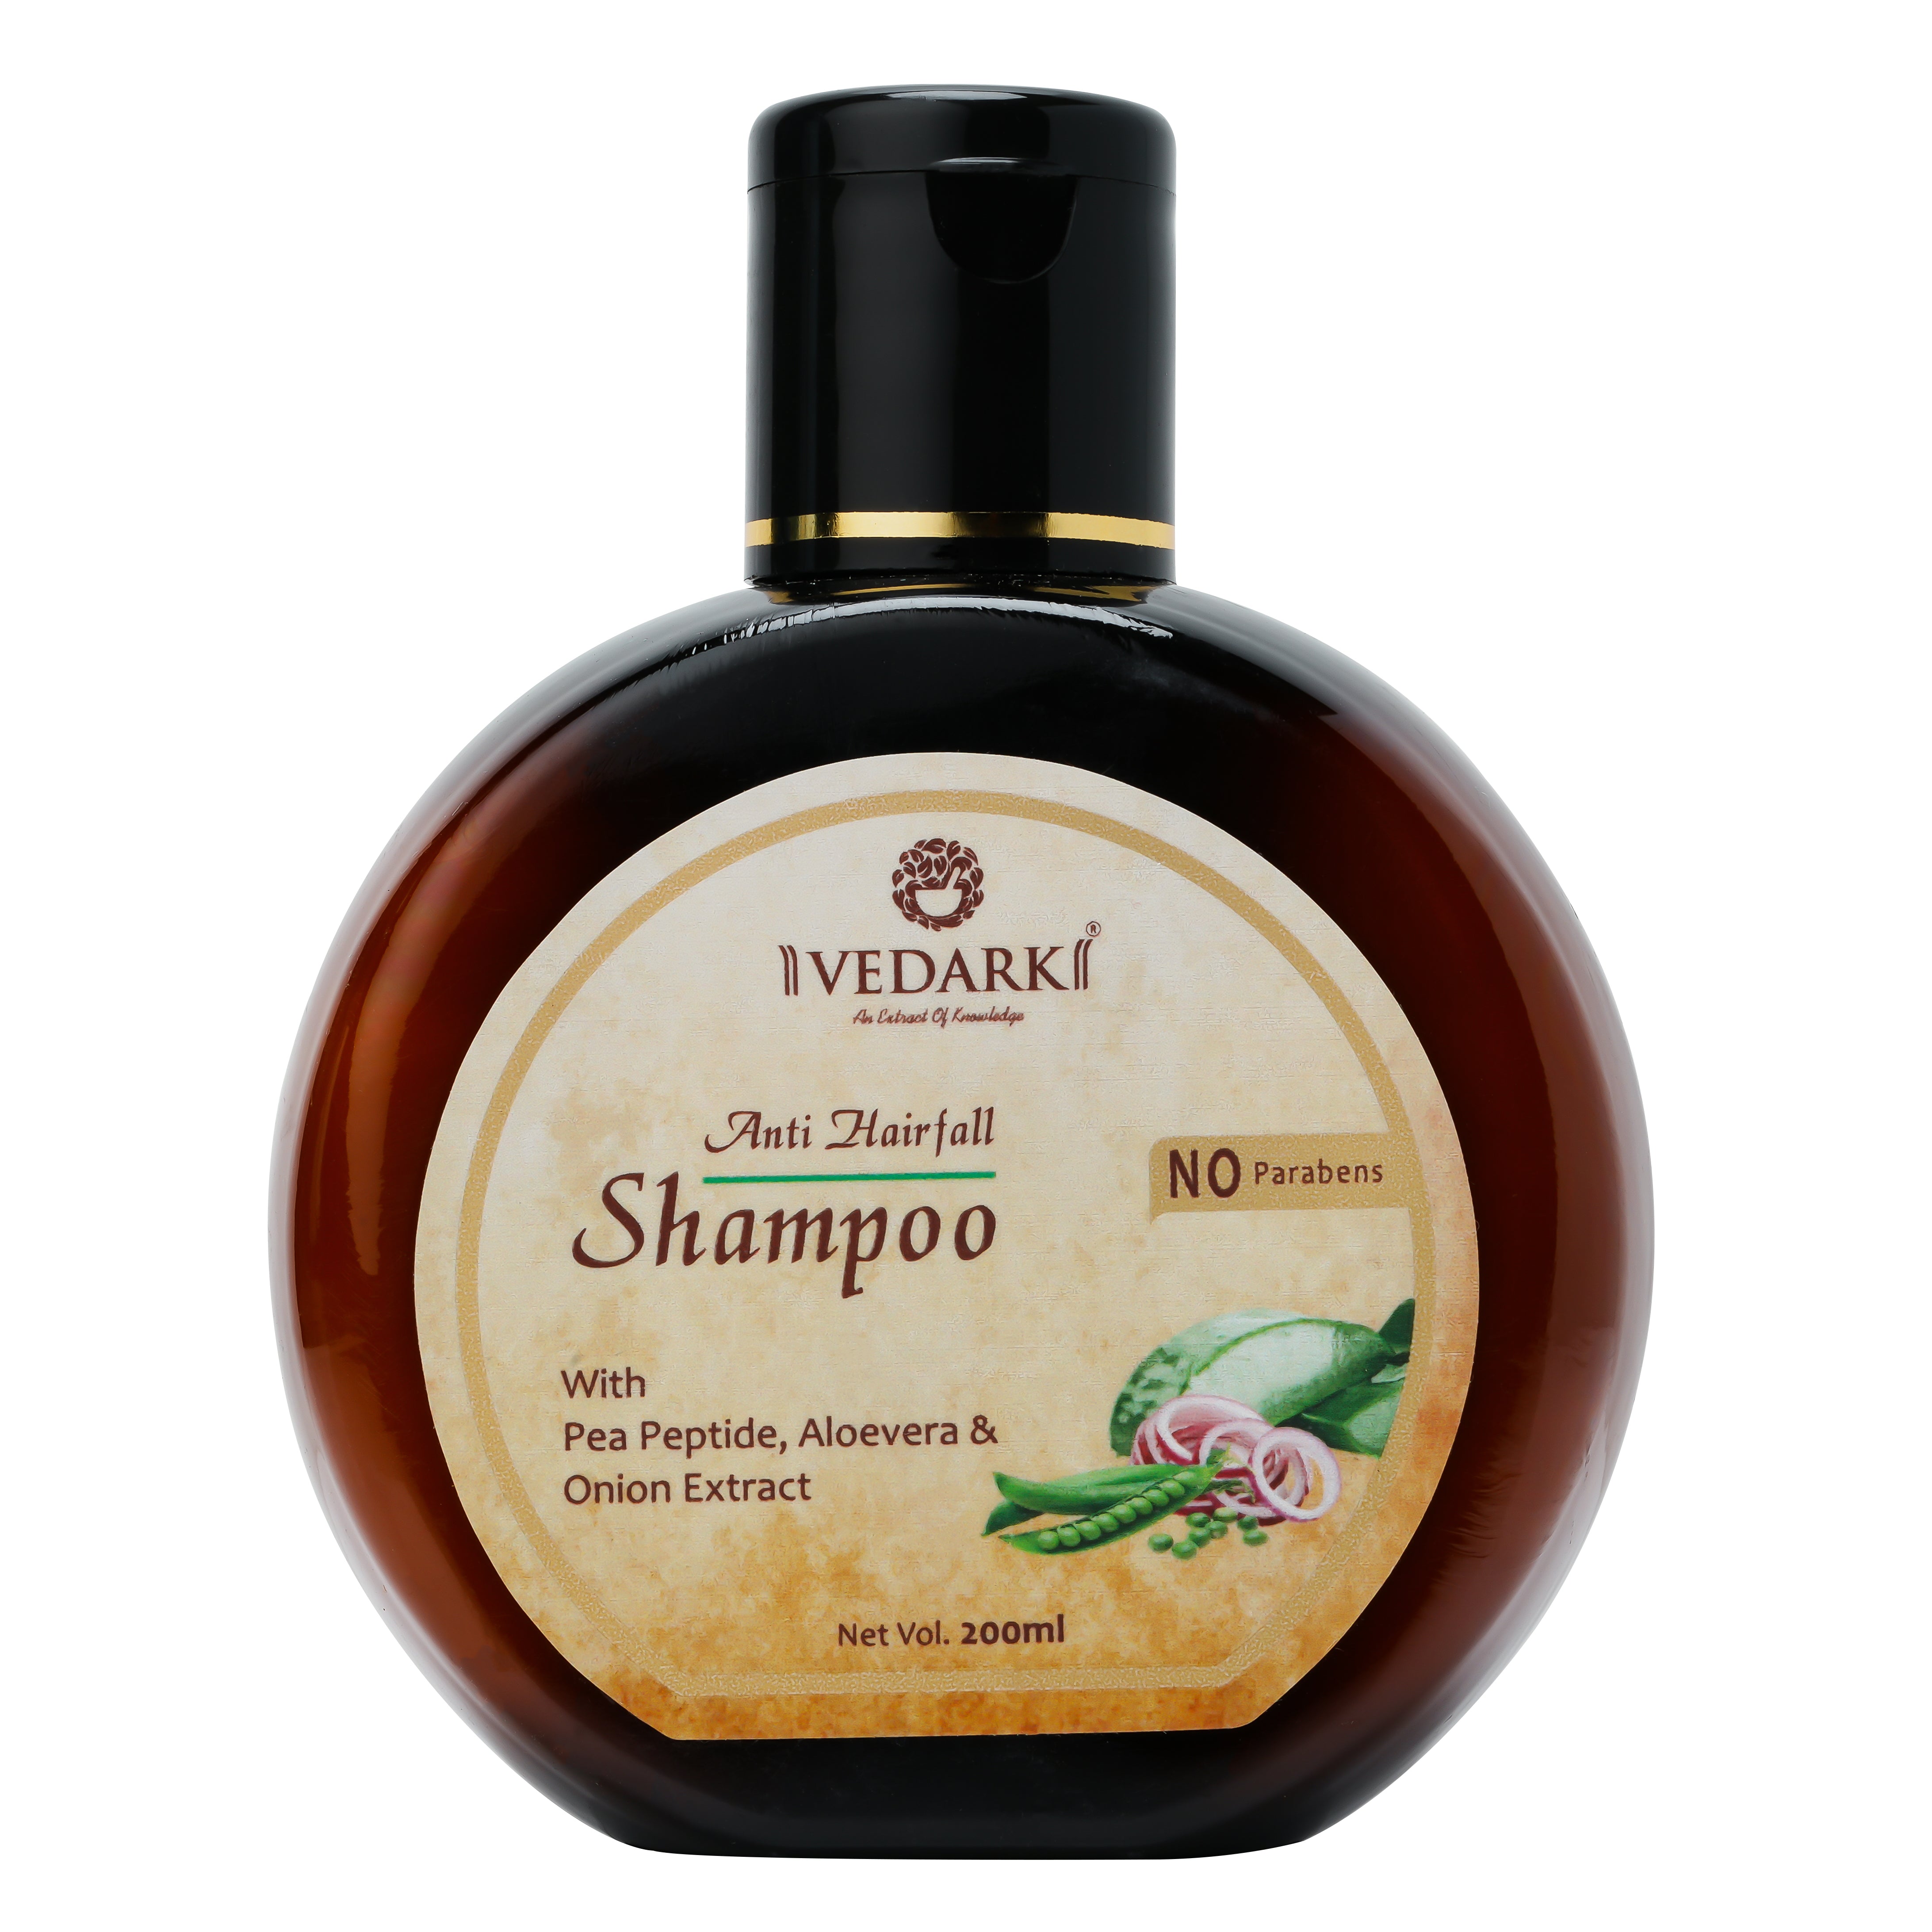 Vedark Anti Hairfall Shampoo 200ml